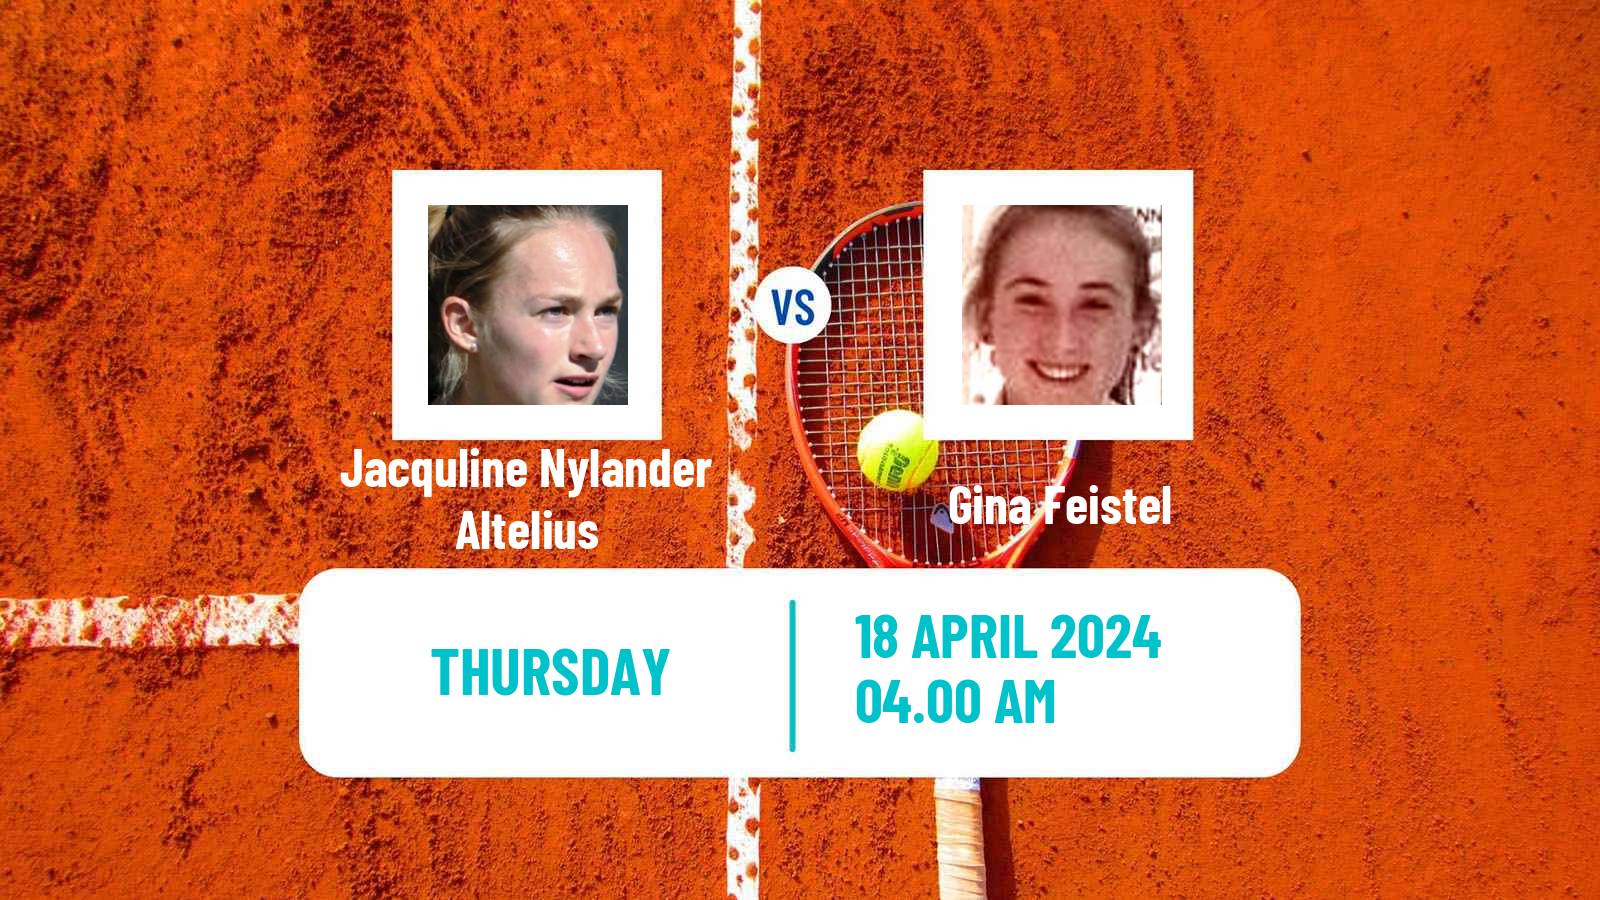 Tennis ITF W15 Telde 3 Women Jacquline Nylander Altelius - Gina Feistel